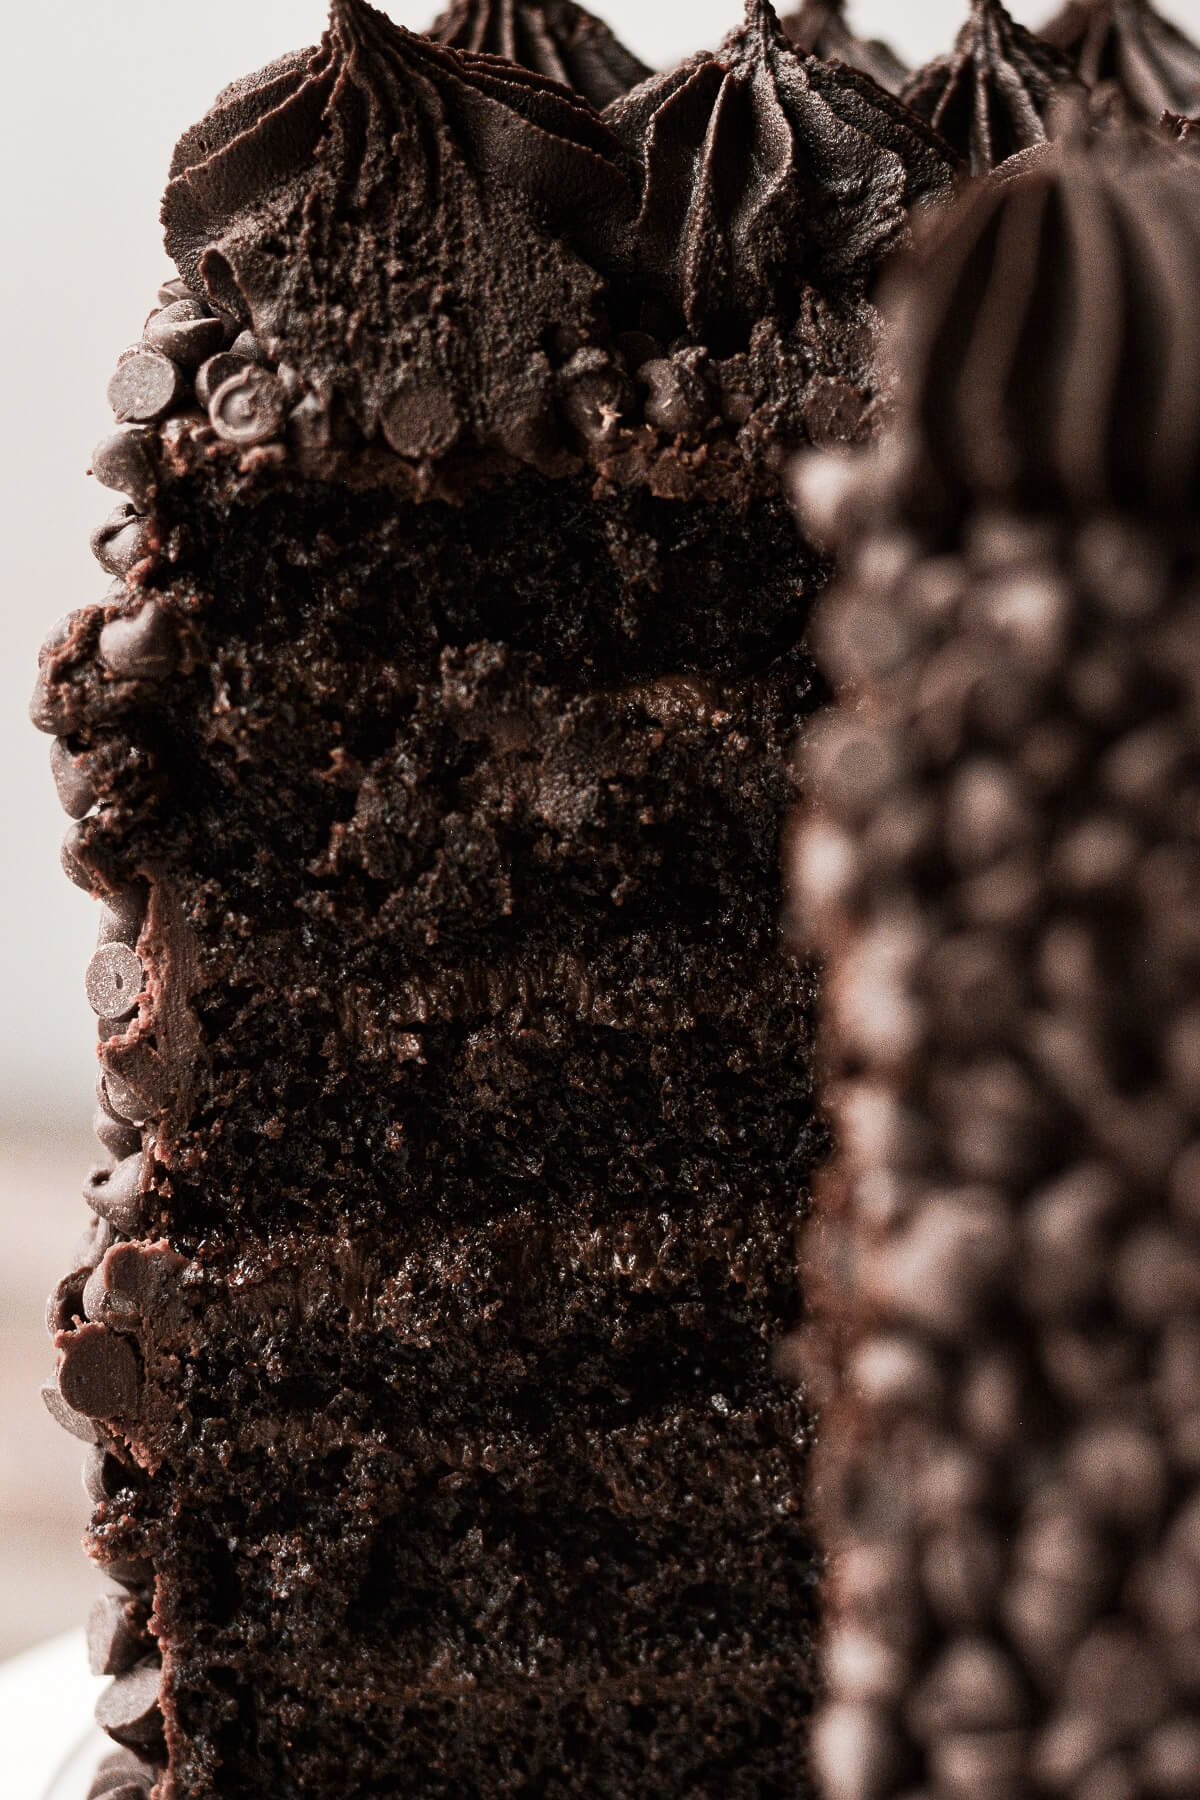 Closeup of the layers inside a chocolate truffle cake.